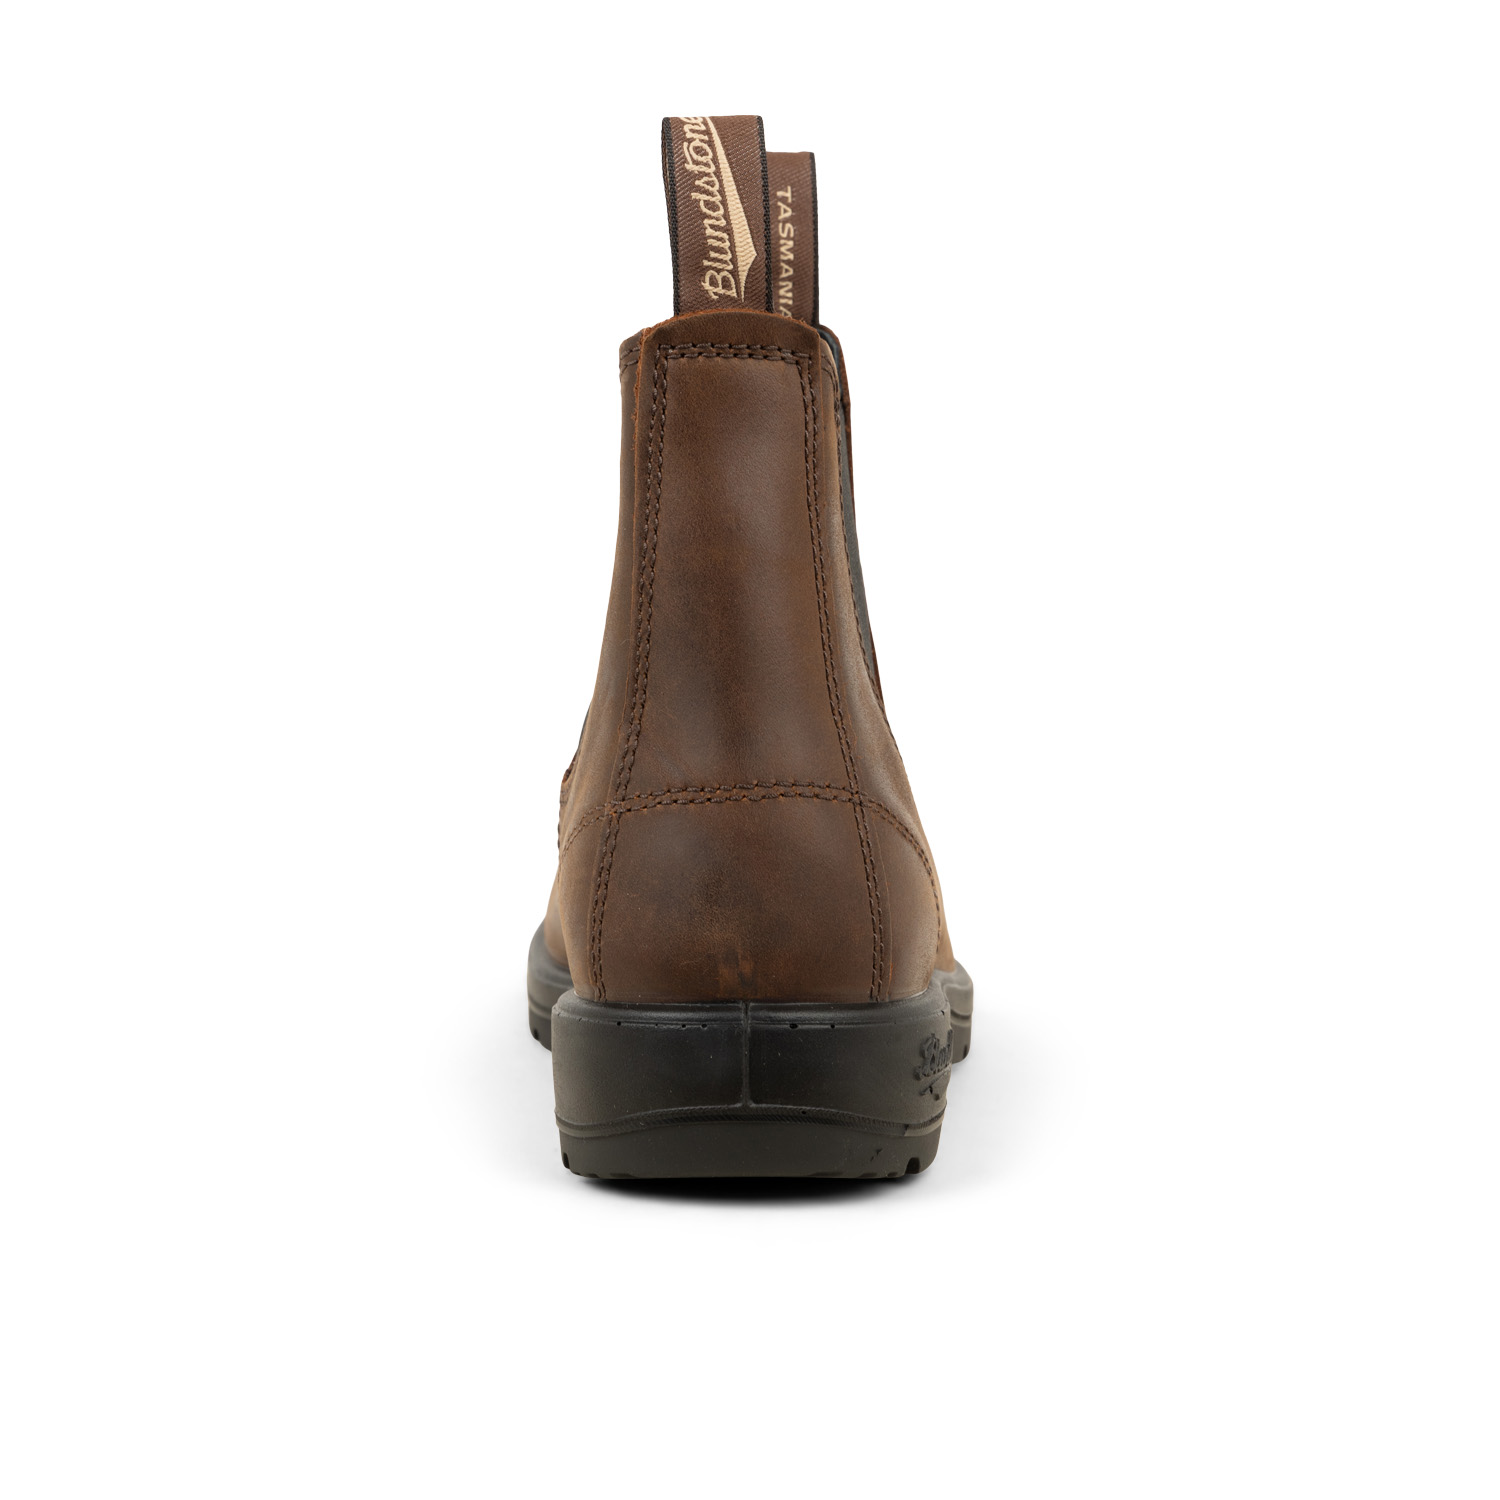 03 - CLASSIC CHELSEA - BLUNDSTONE - Boots et bottines - Cuir